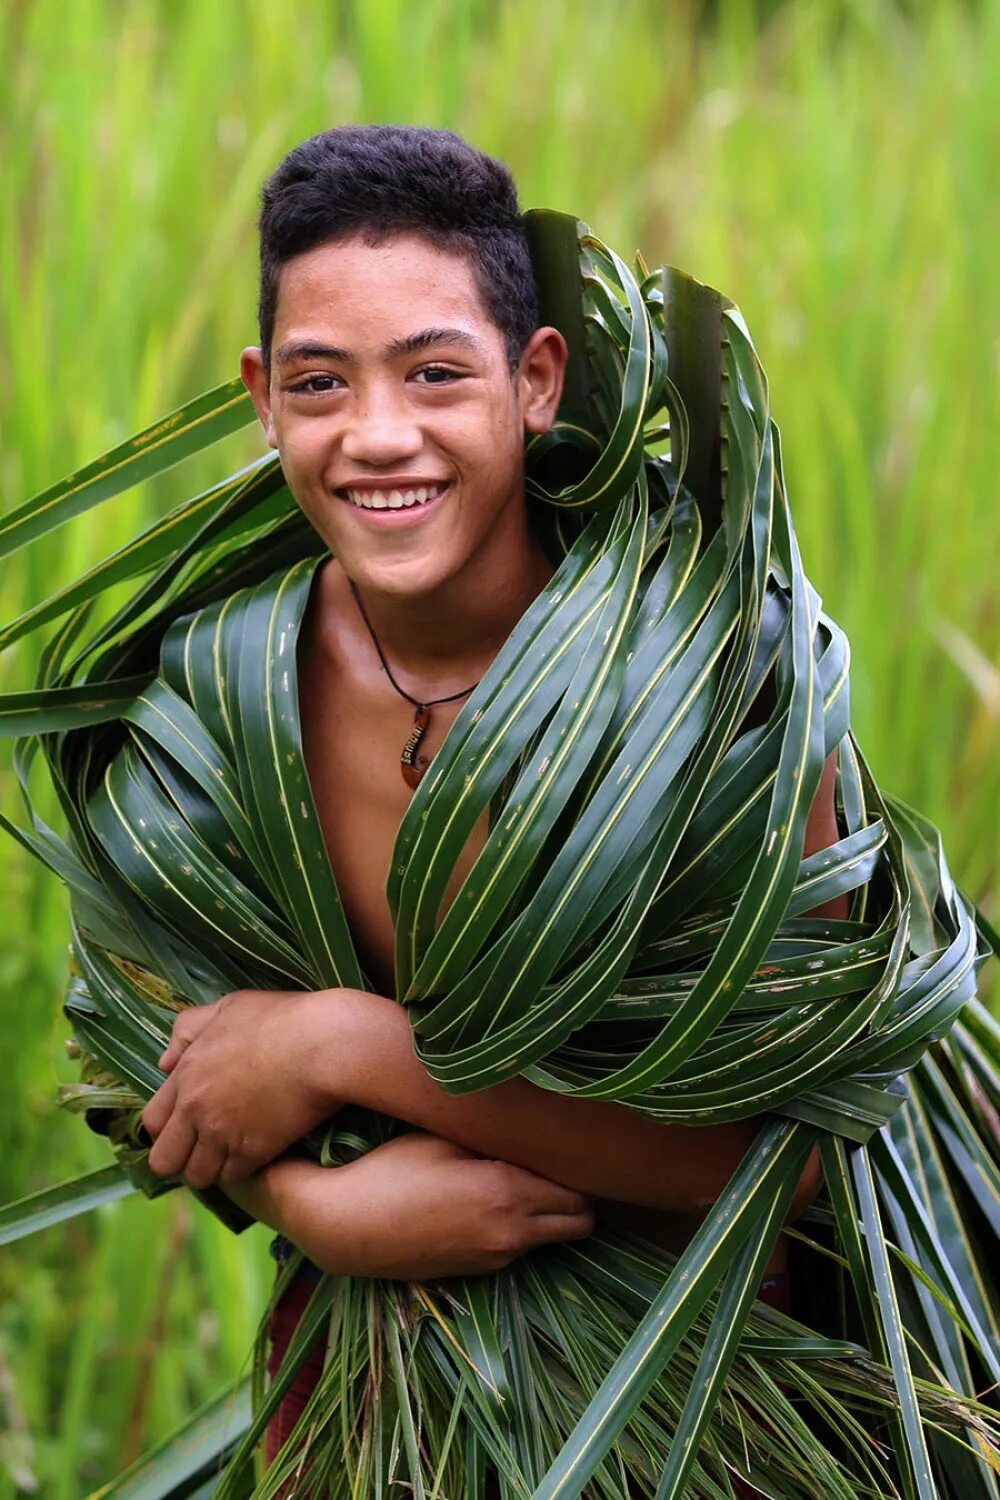 Савайи Самоа. Самоанцы раса. Самоанцы жители острова Самоа. Самого редкого человека